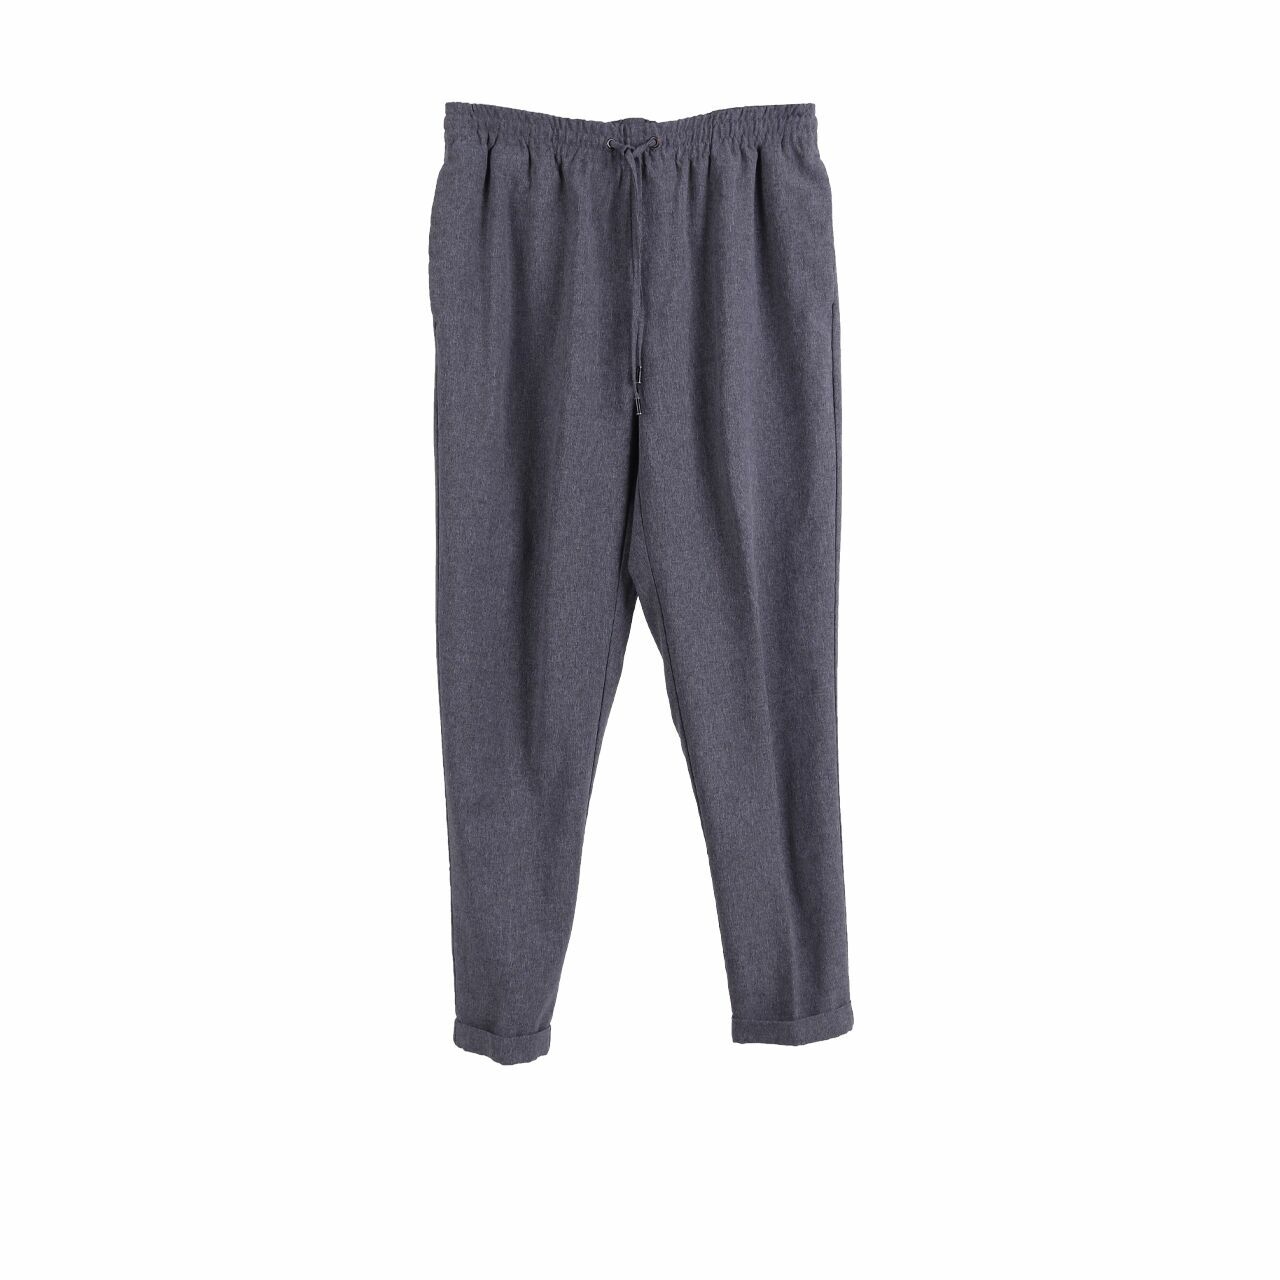 Zara Dark Grey Long Pants